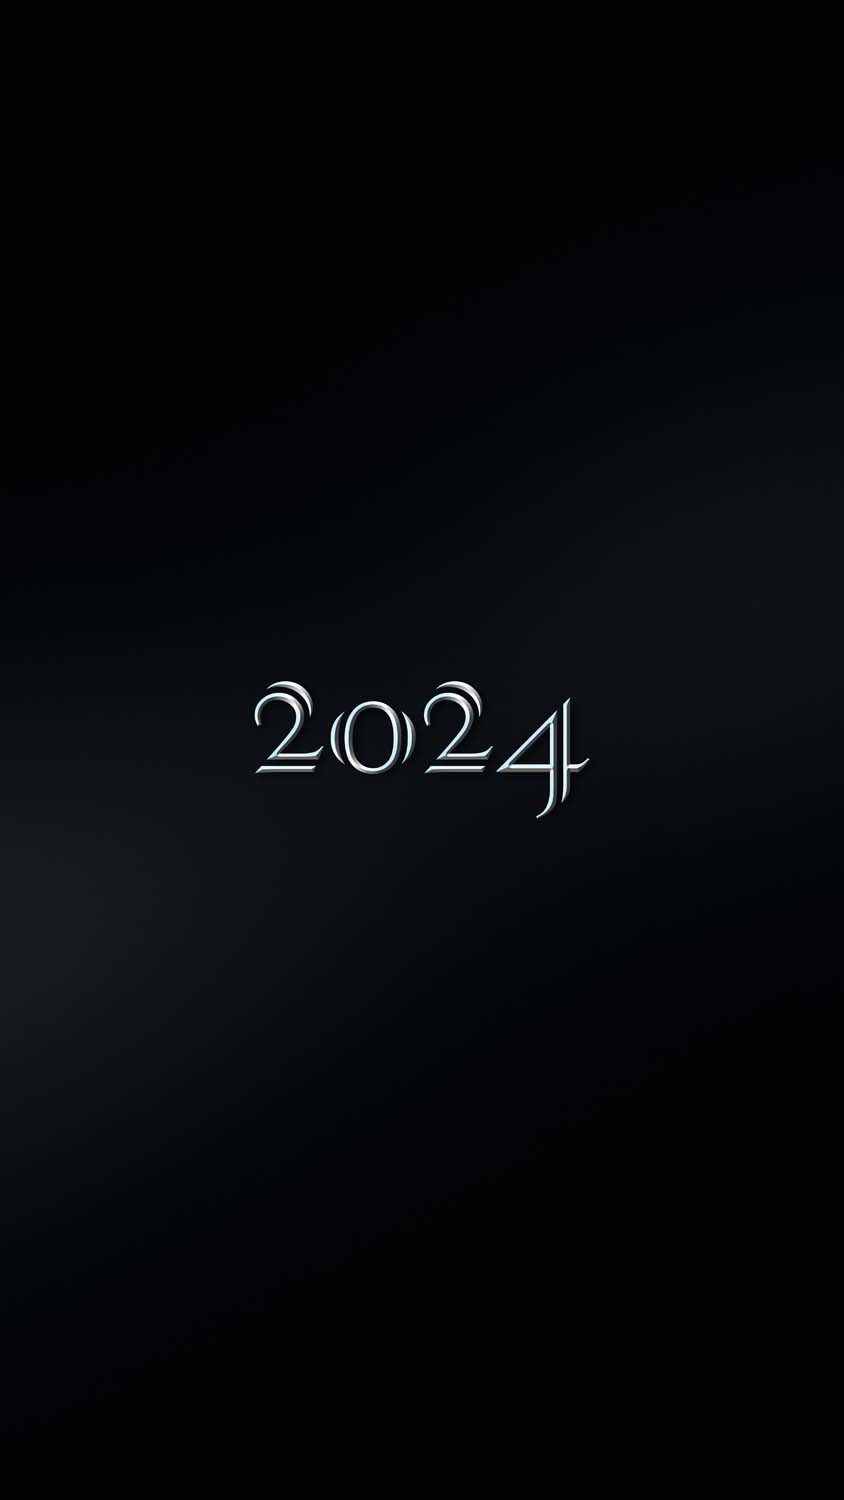 2024 New Year 4K iPhone Wallpaper